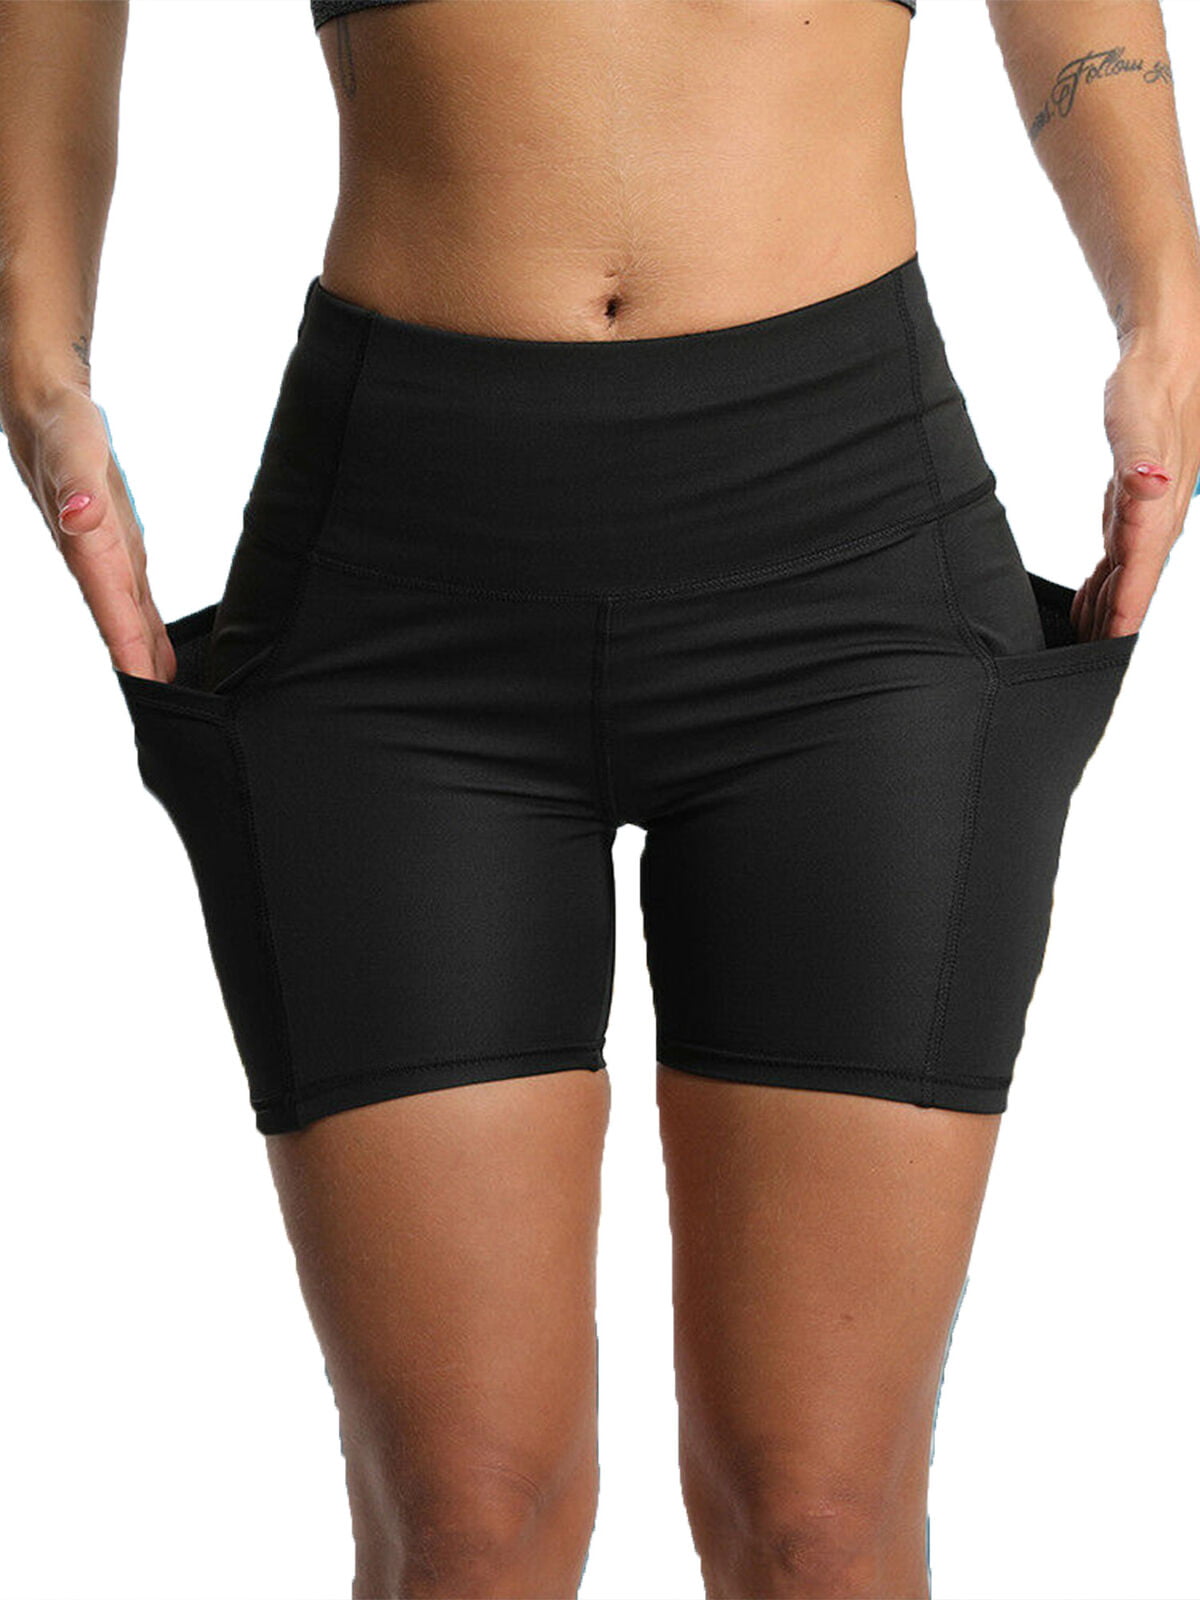 DODOING Womens Booty Shorts Casual Cotton Yoga Short Shorts Mini